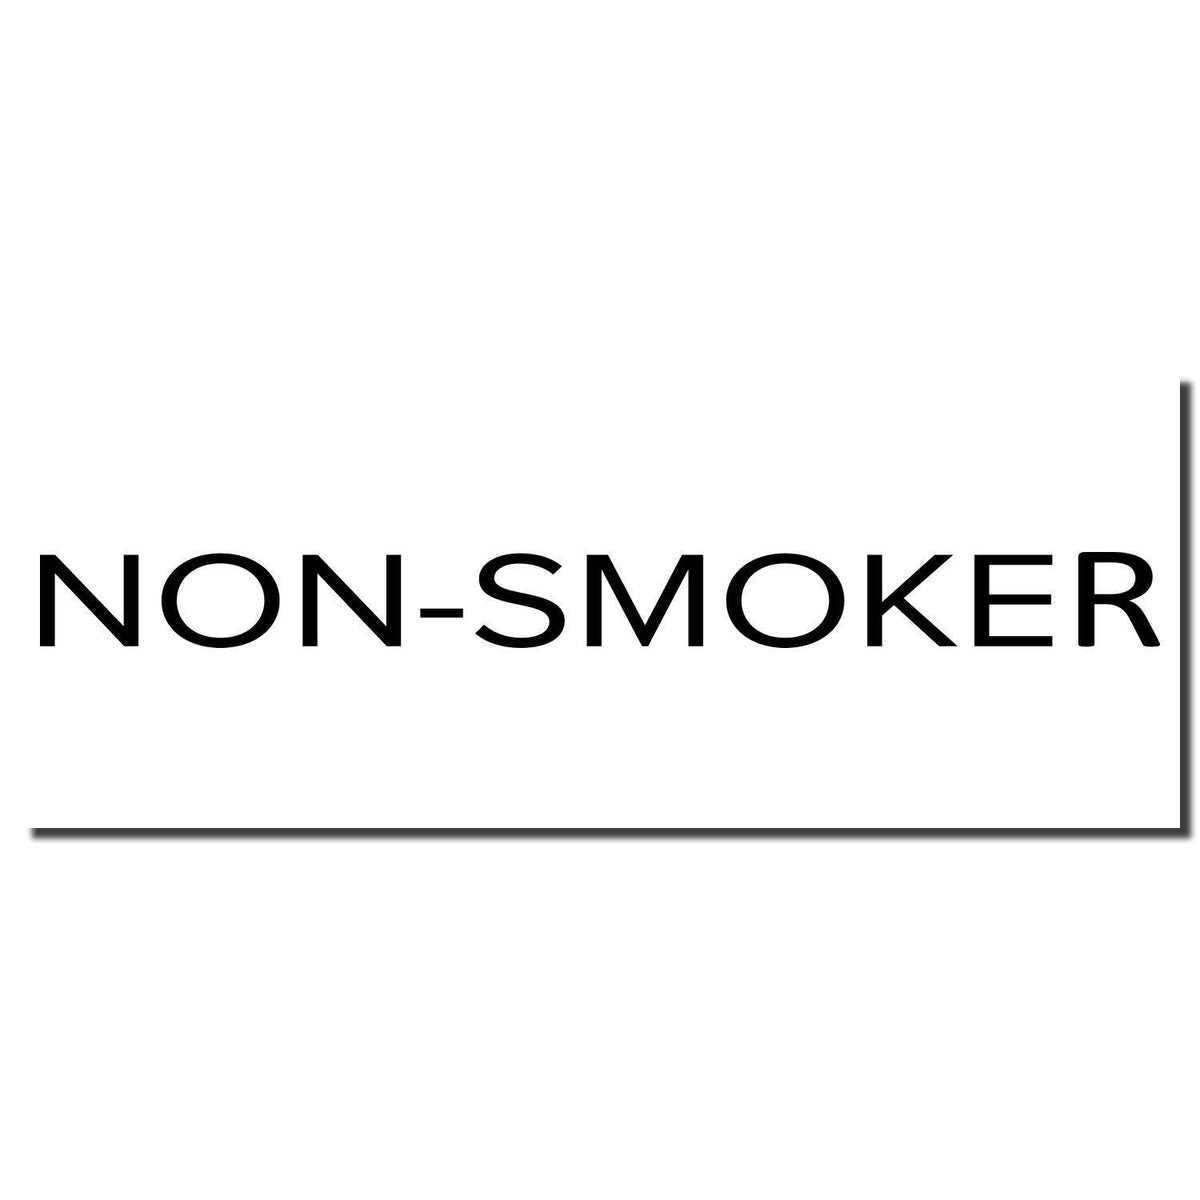 Enlarged Imprint Large Narrow Font Non-Smoker Rubber Stamp Sample